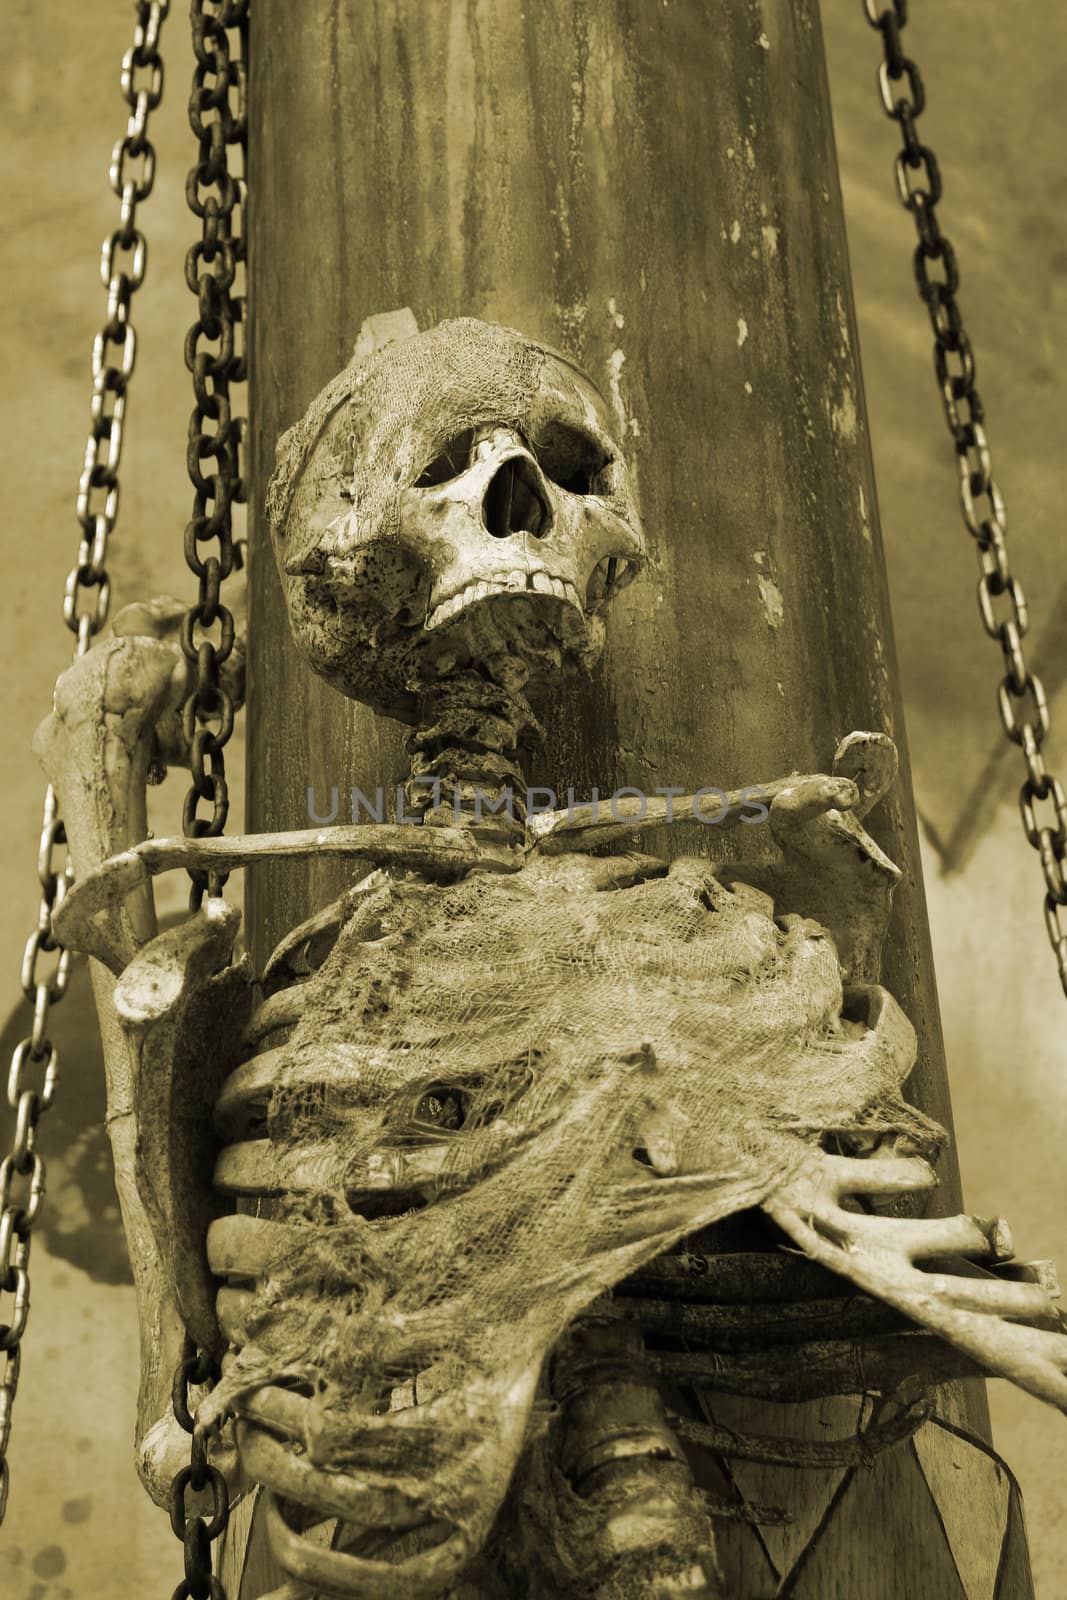 Chained up skeleton by njnightsky